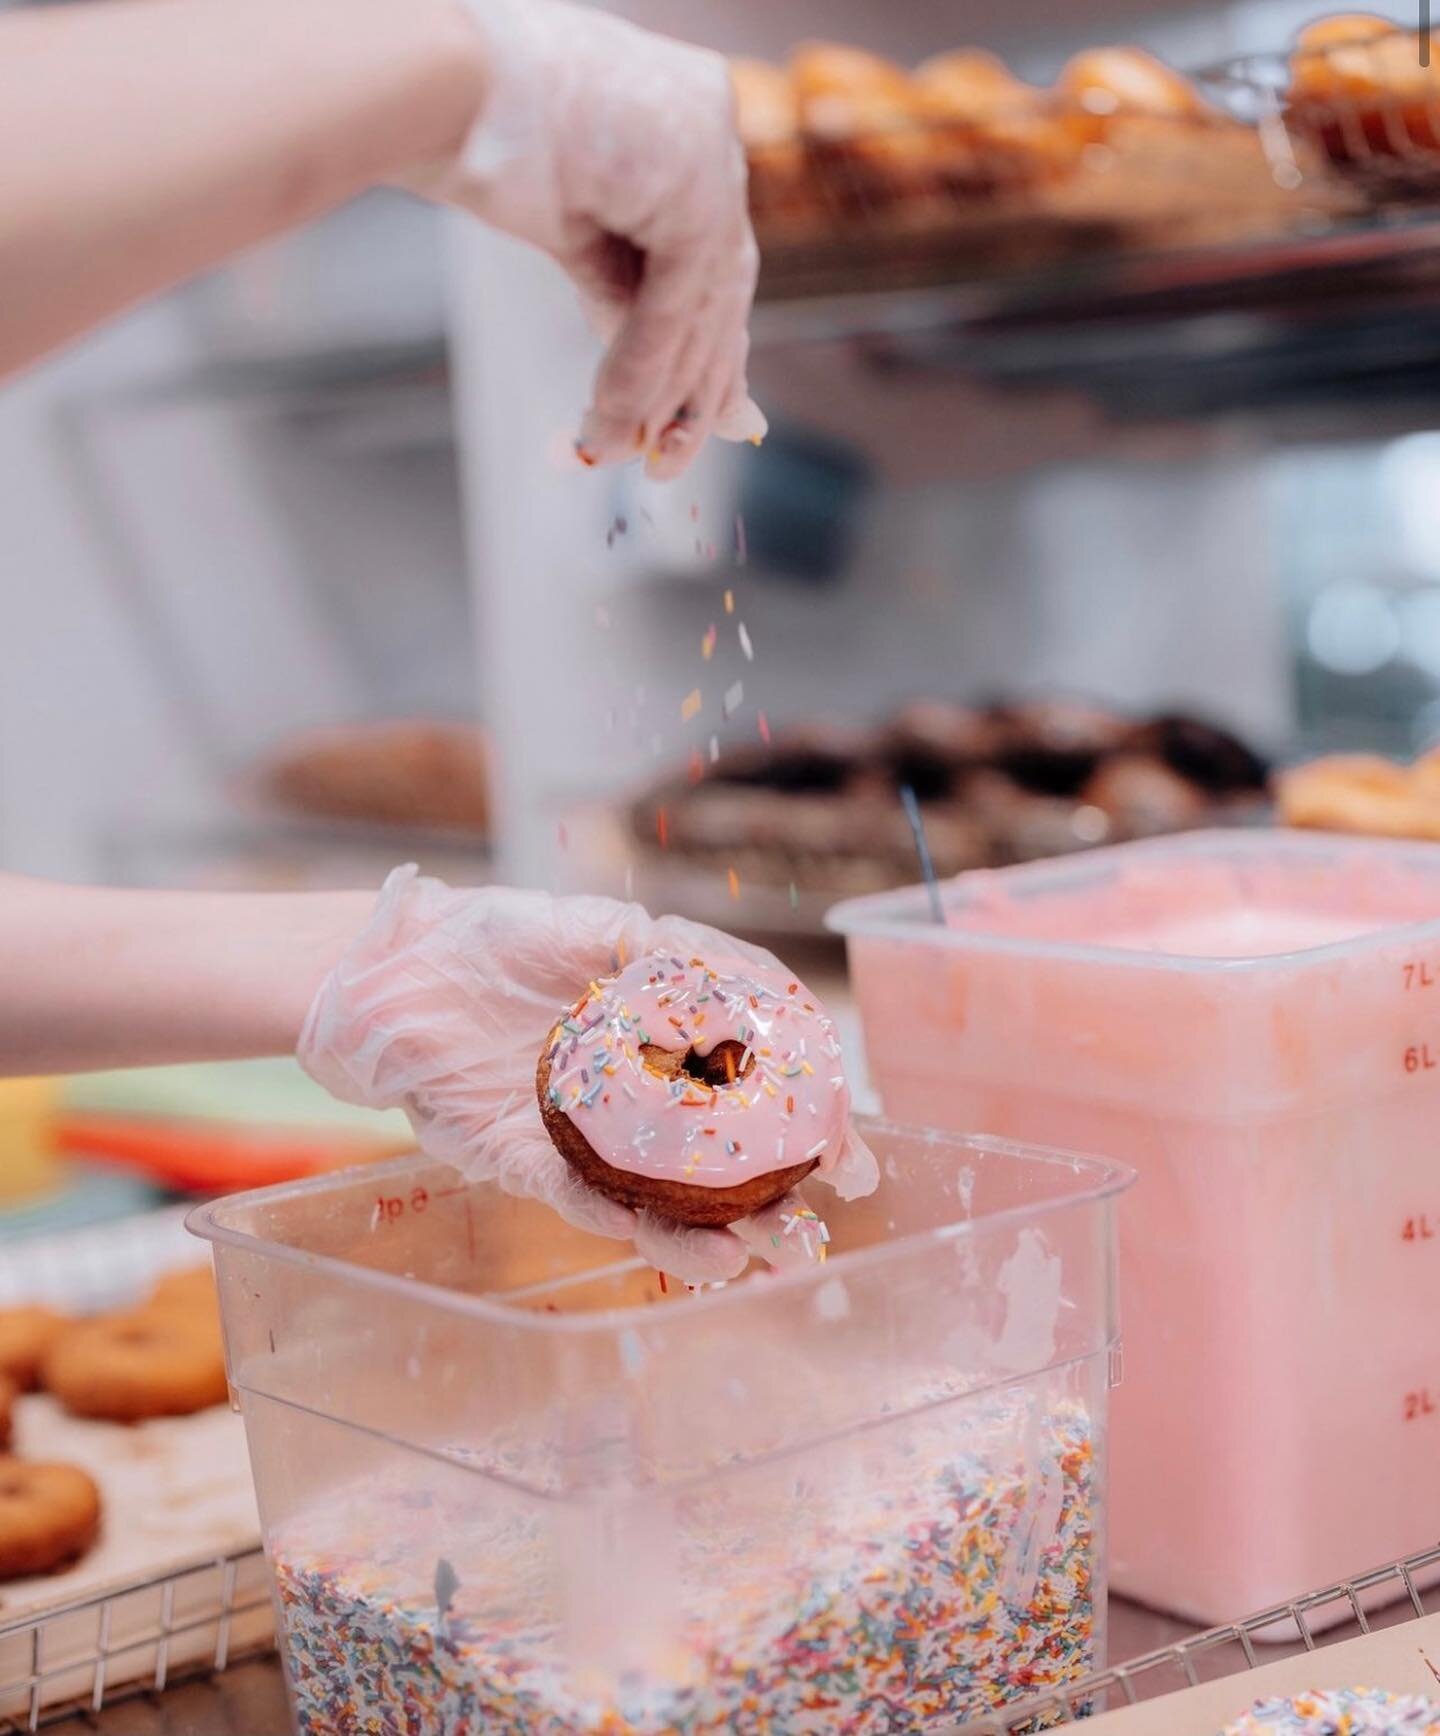 Just a little sprinkle 🌧🌈

#Donut #Doughnut #Doughnuts #Donuts #Vancouver #VancouverFood #VancouverFoodie #Foodie #Food #Vancity #YVR #VancouverEats #DishedVan #DishedVancouver #CuriocityVan #CuriocityVancouver #VancouverBakery #Bakery #VancouverDe